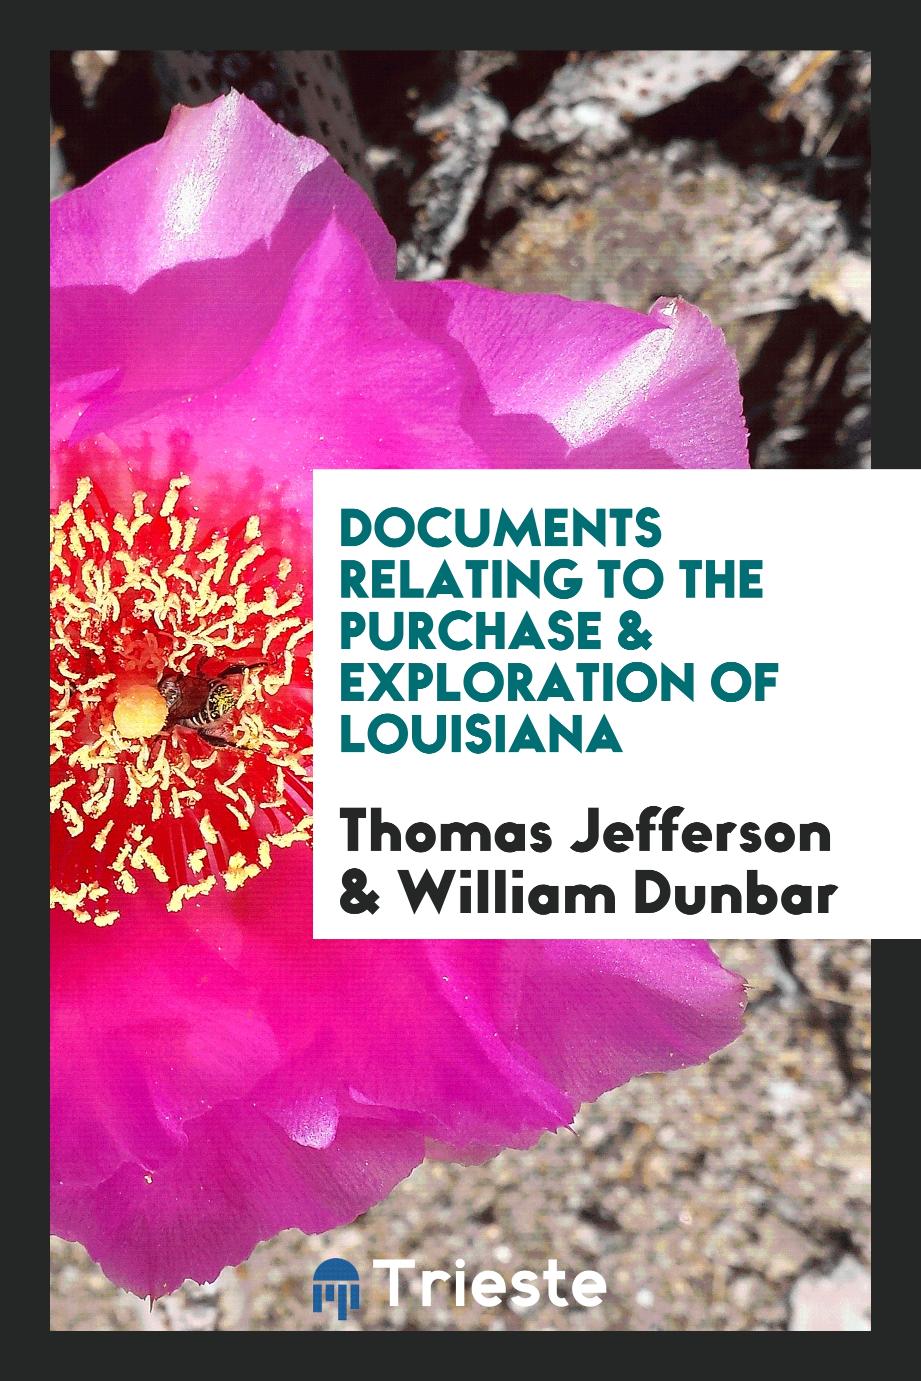 Thomas Jefferson, William Dunbar - Documents Relating to the Purchase & Exploration of Louisiana